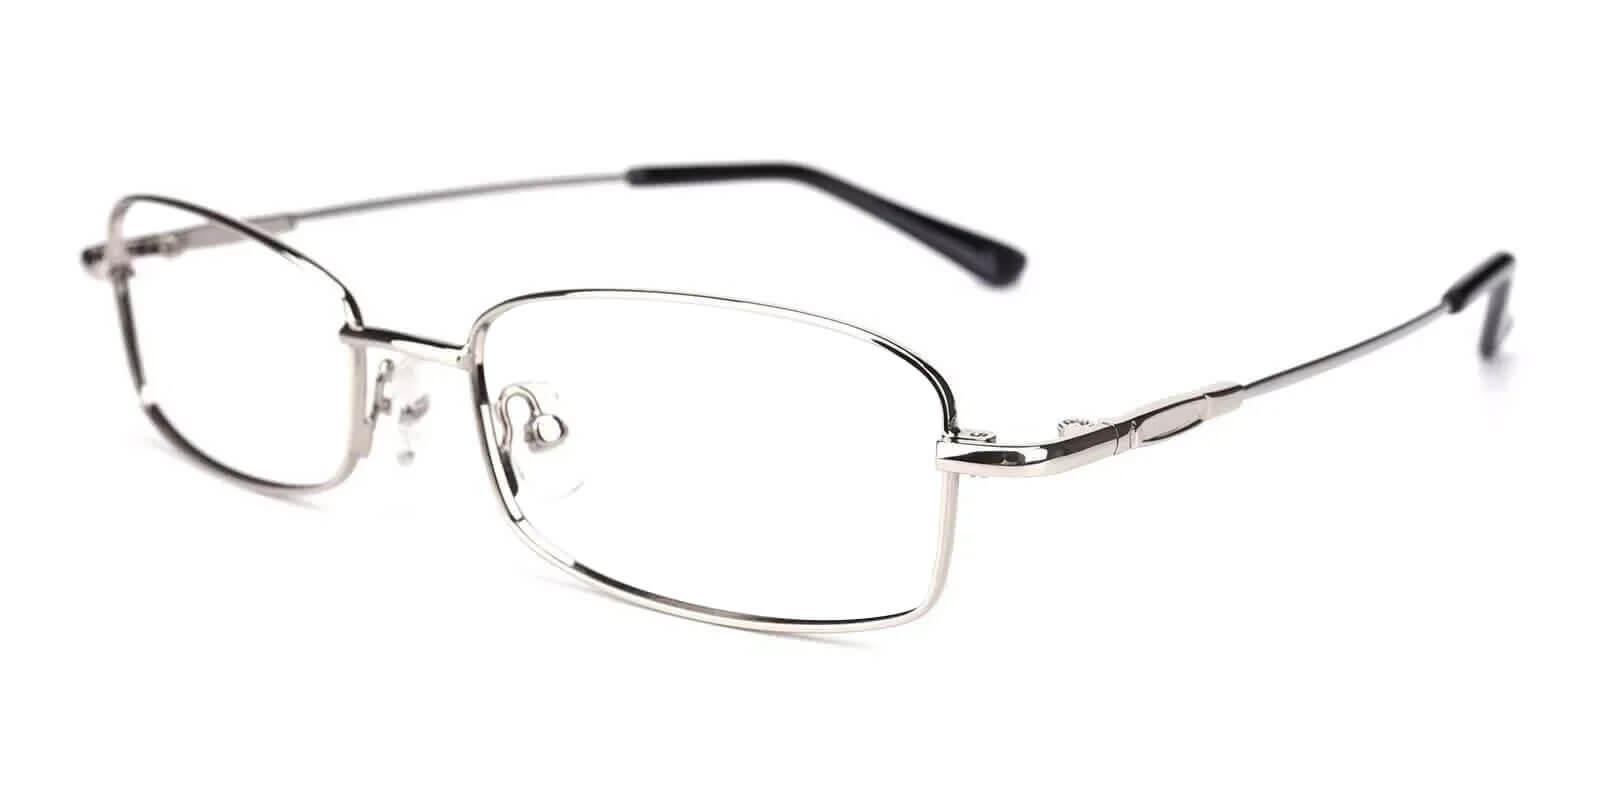 Healdton Silver Metal Eyeglasses , NosePads Frames from ABBE Glasses